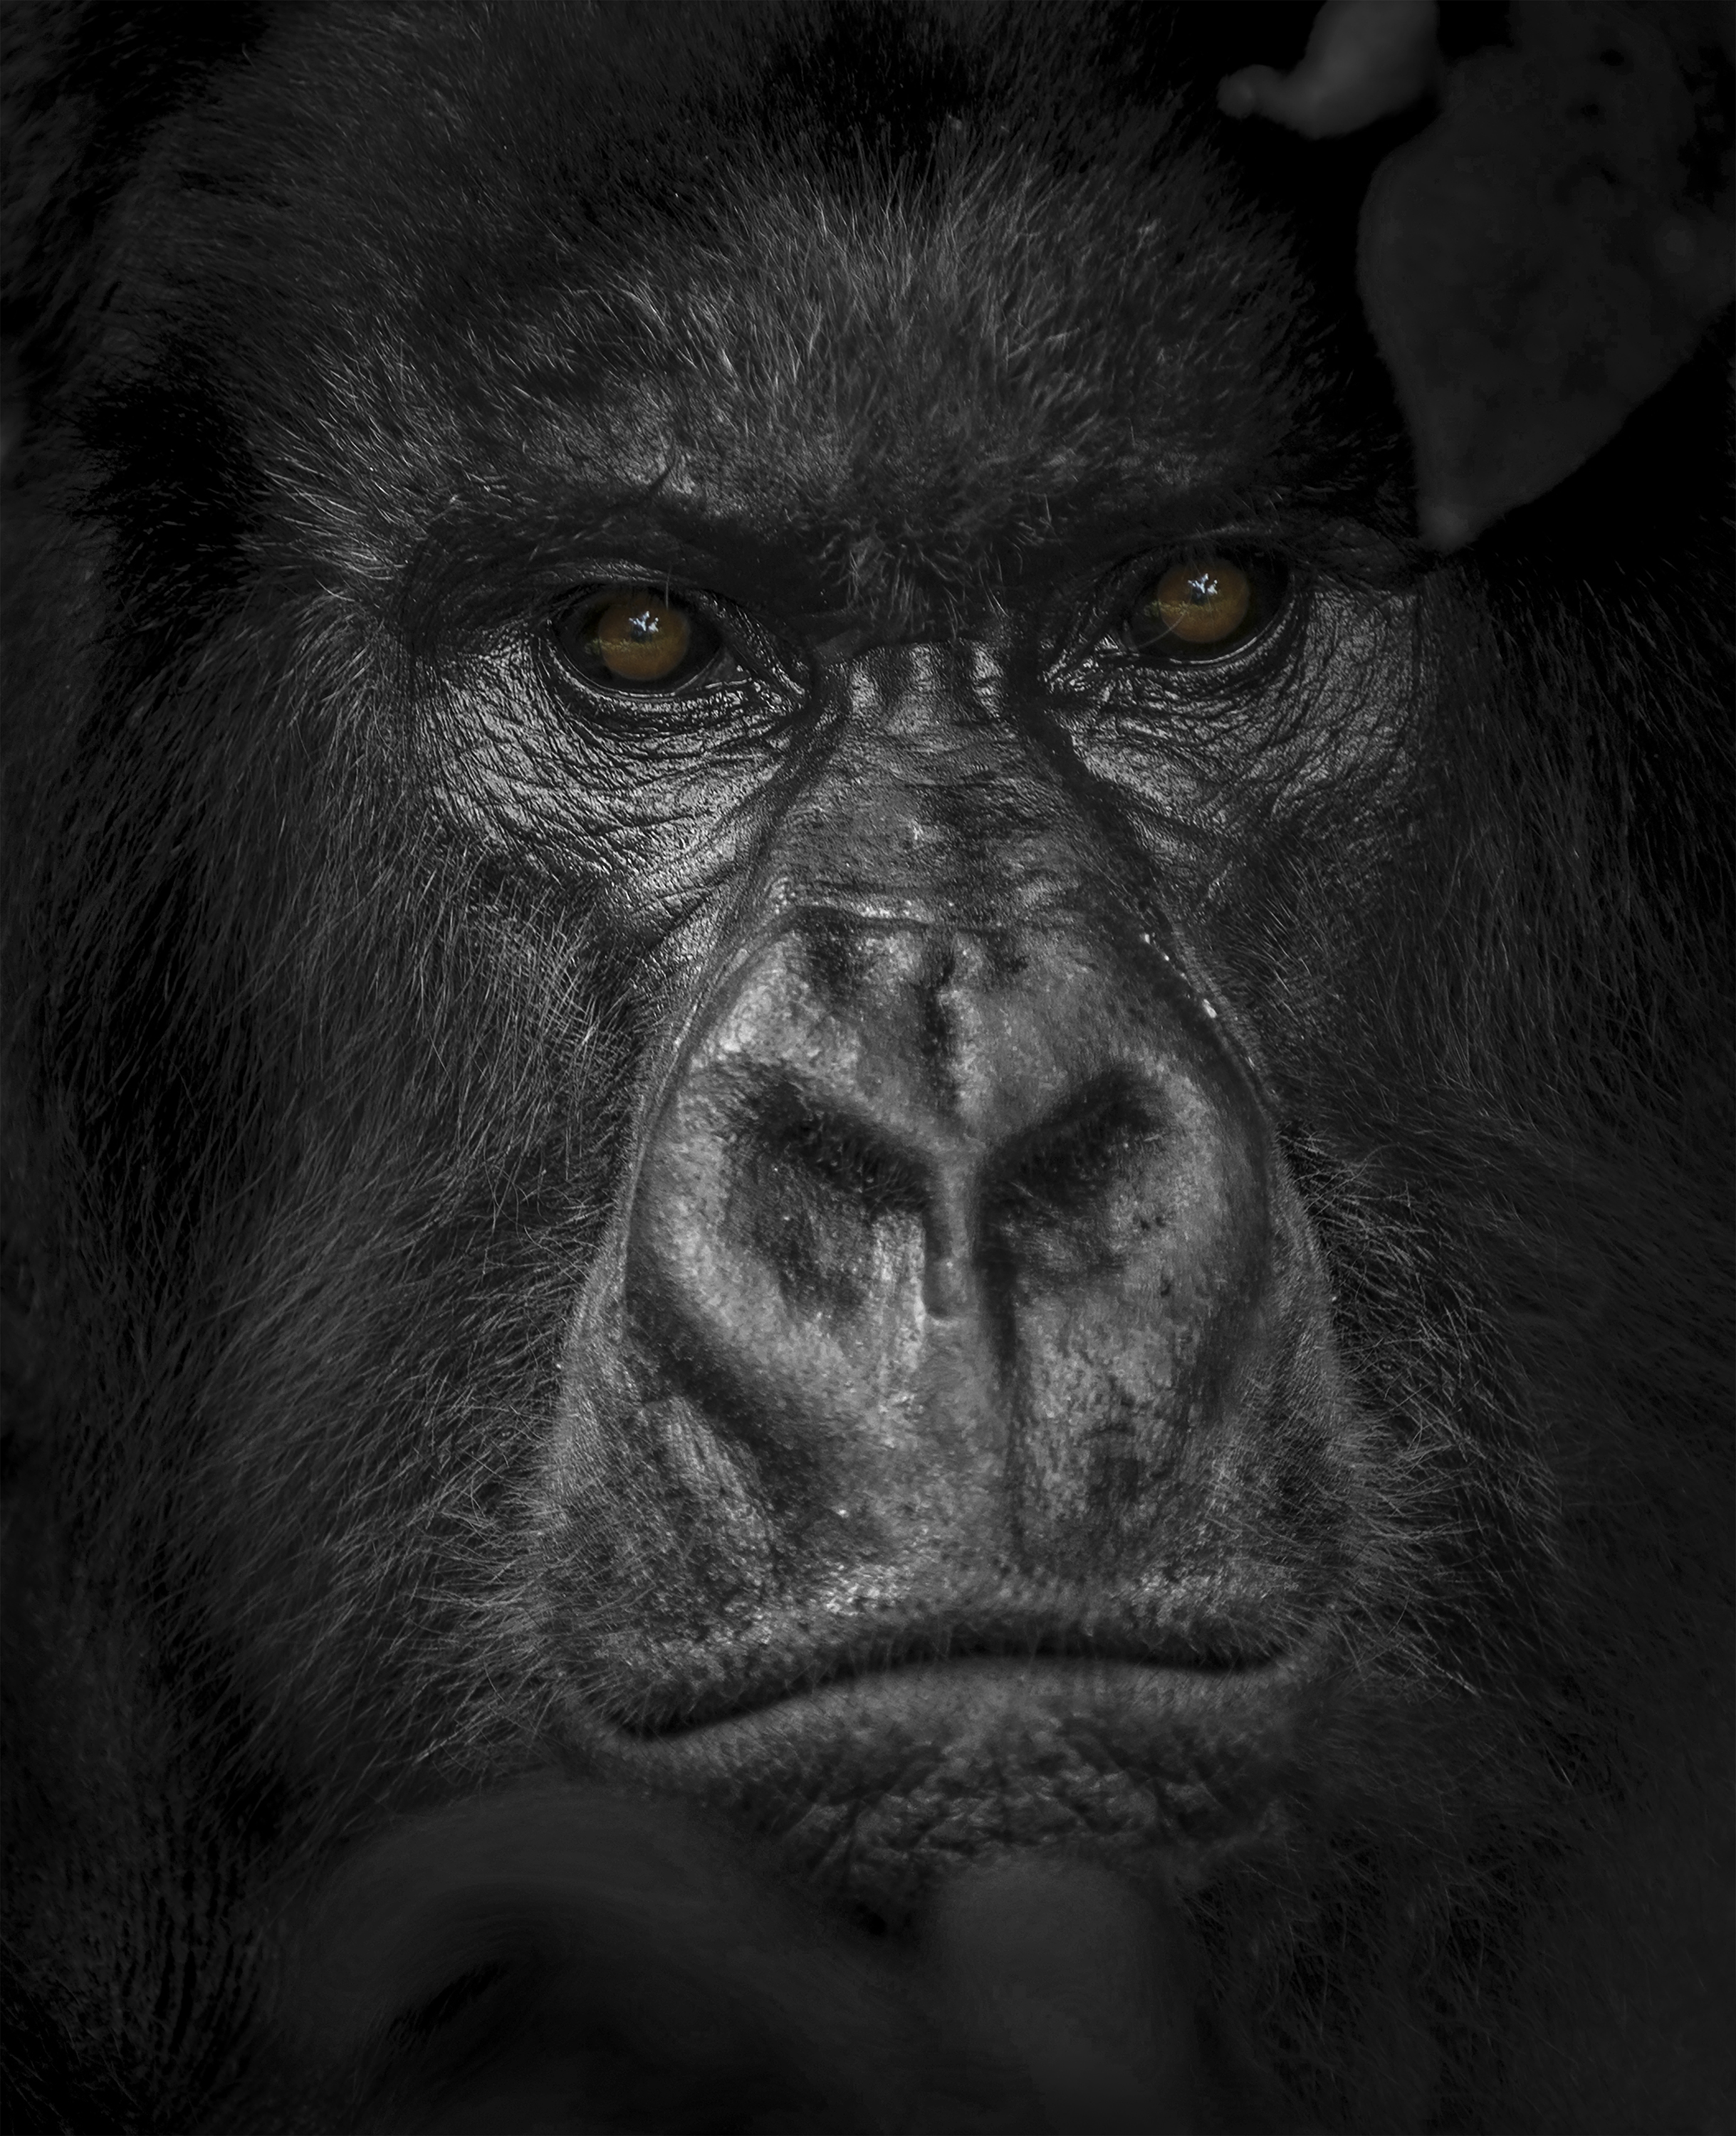 2 Trai_Anfield_Enlightened_Photographic_Safaris_gorilla b&w 3000pixels 300dpi selective_DSC4915-2